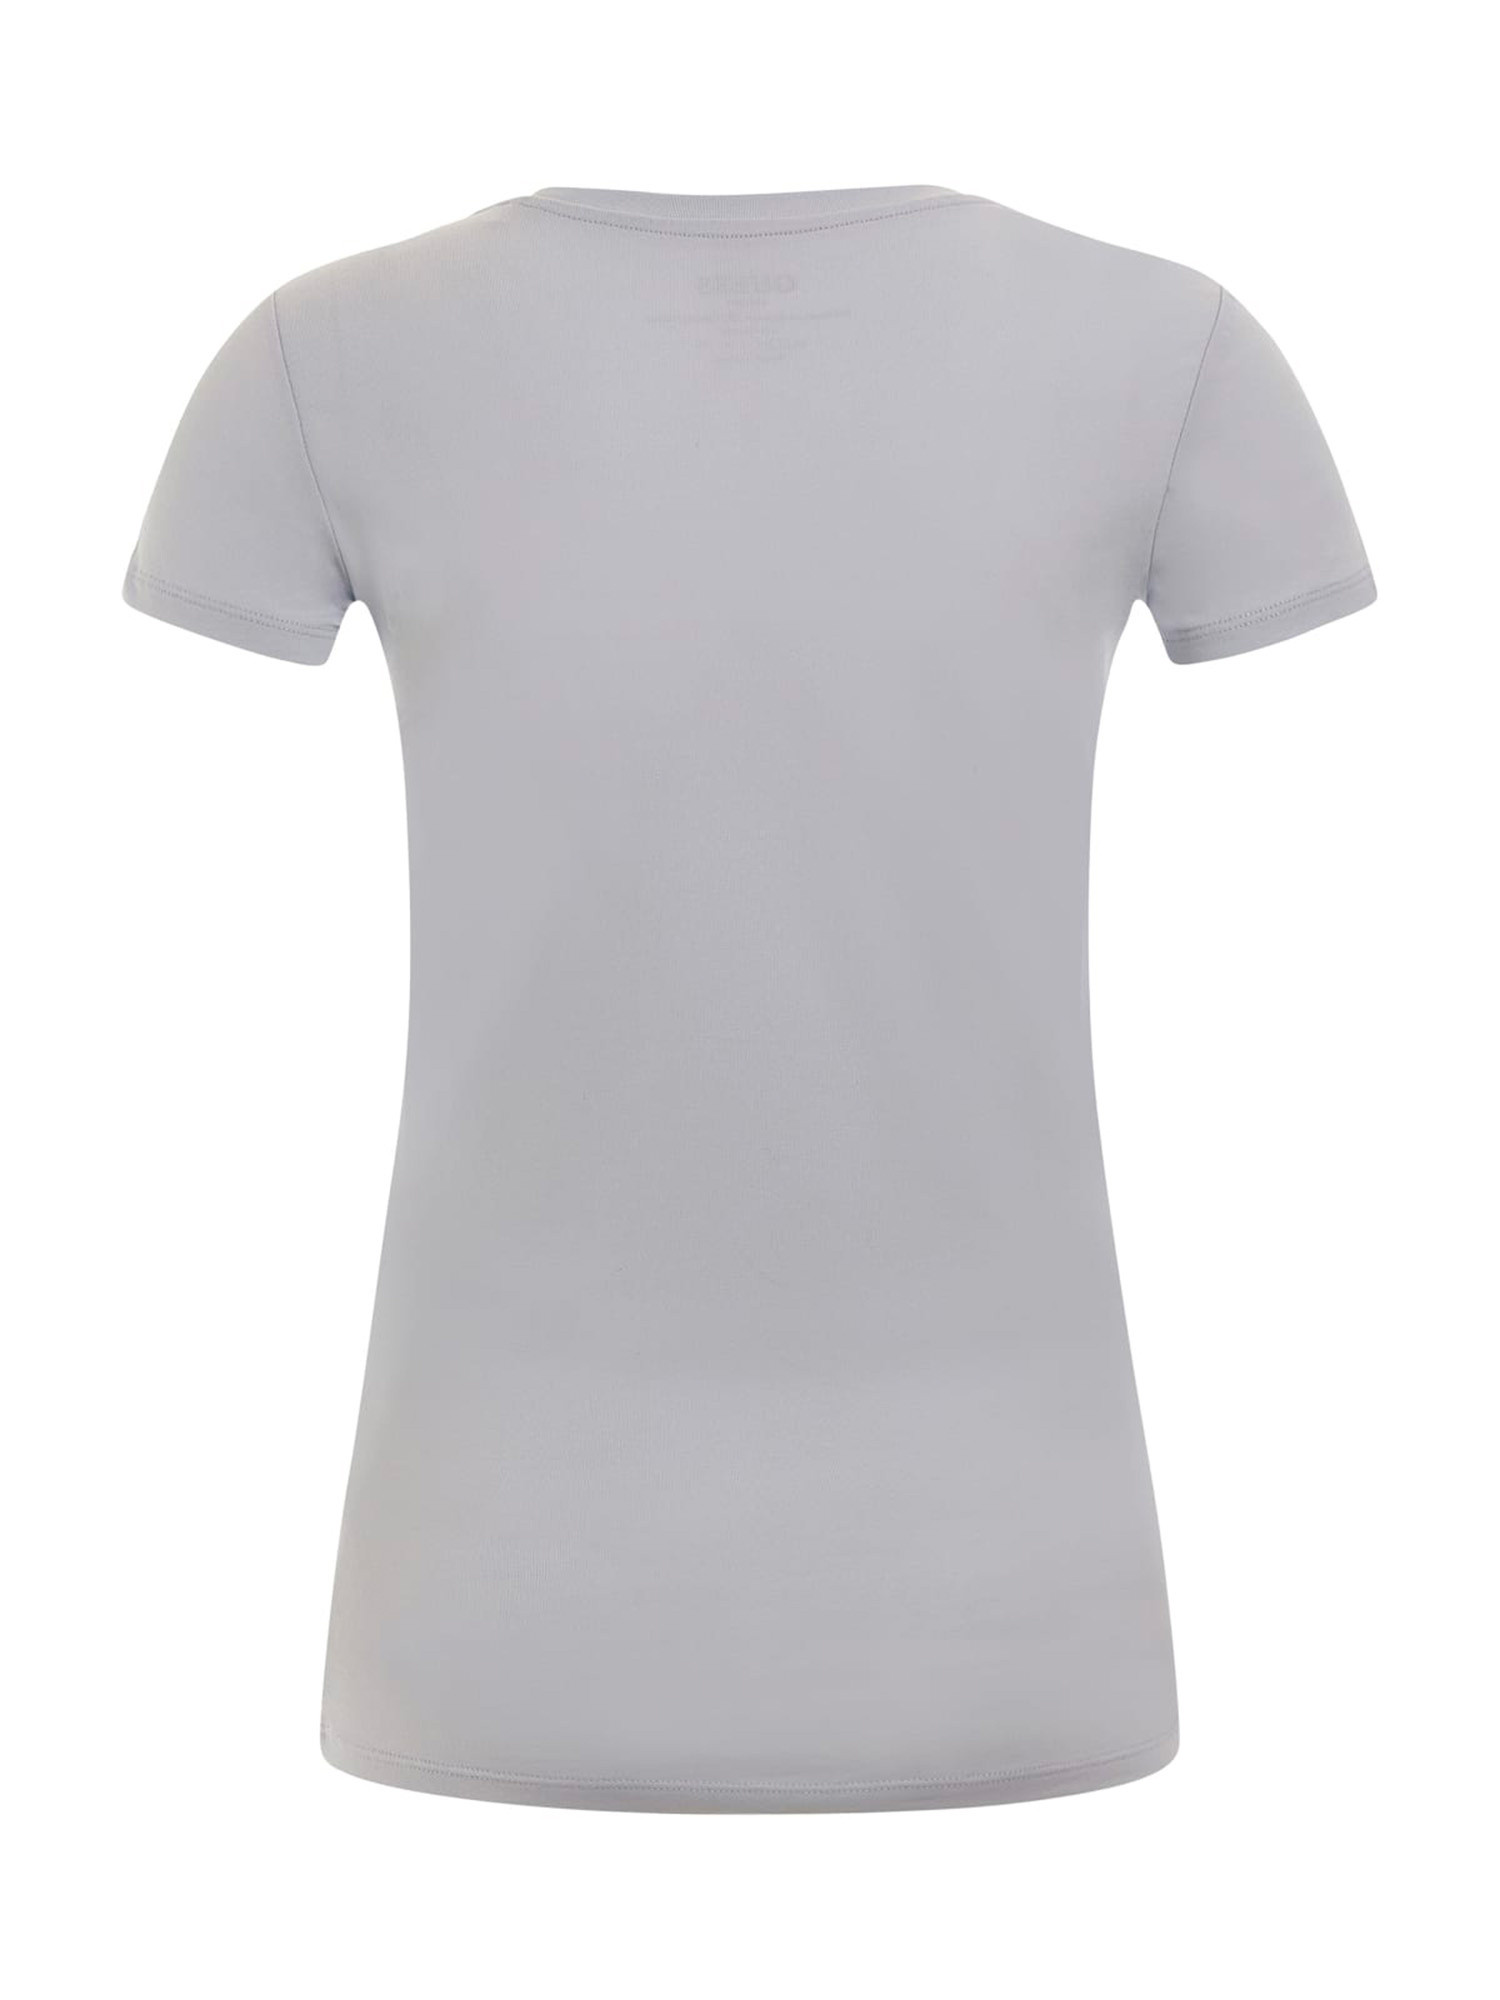 Guess - Slim fit rhinestone logo t-shirt, White, large image number 1